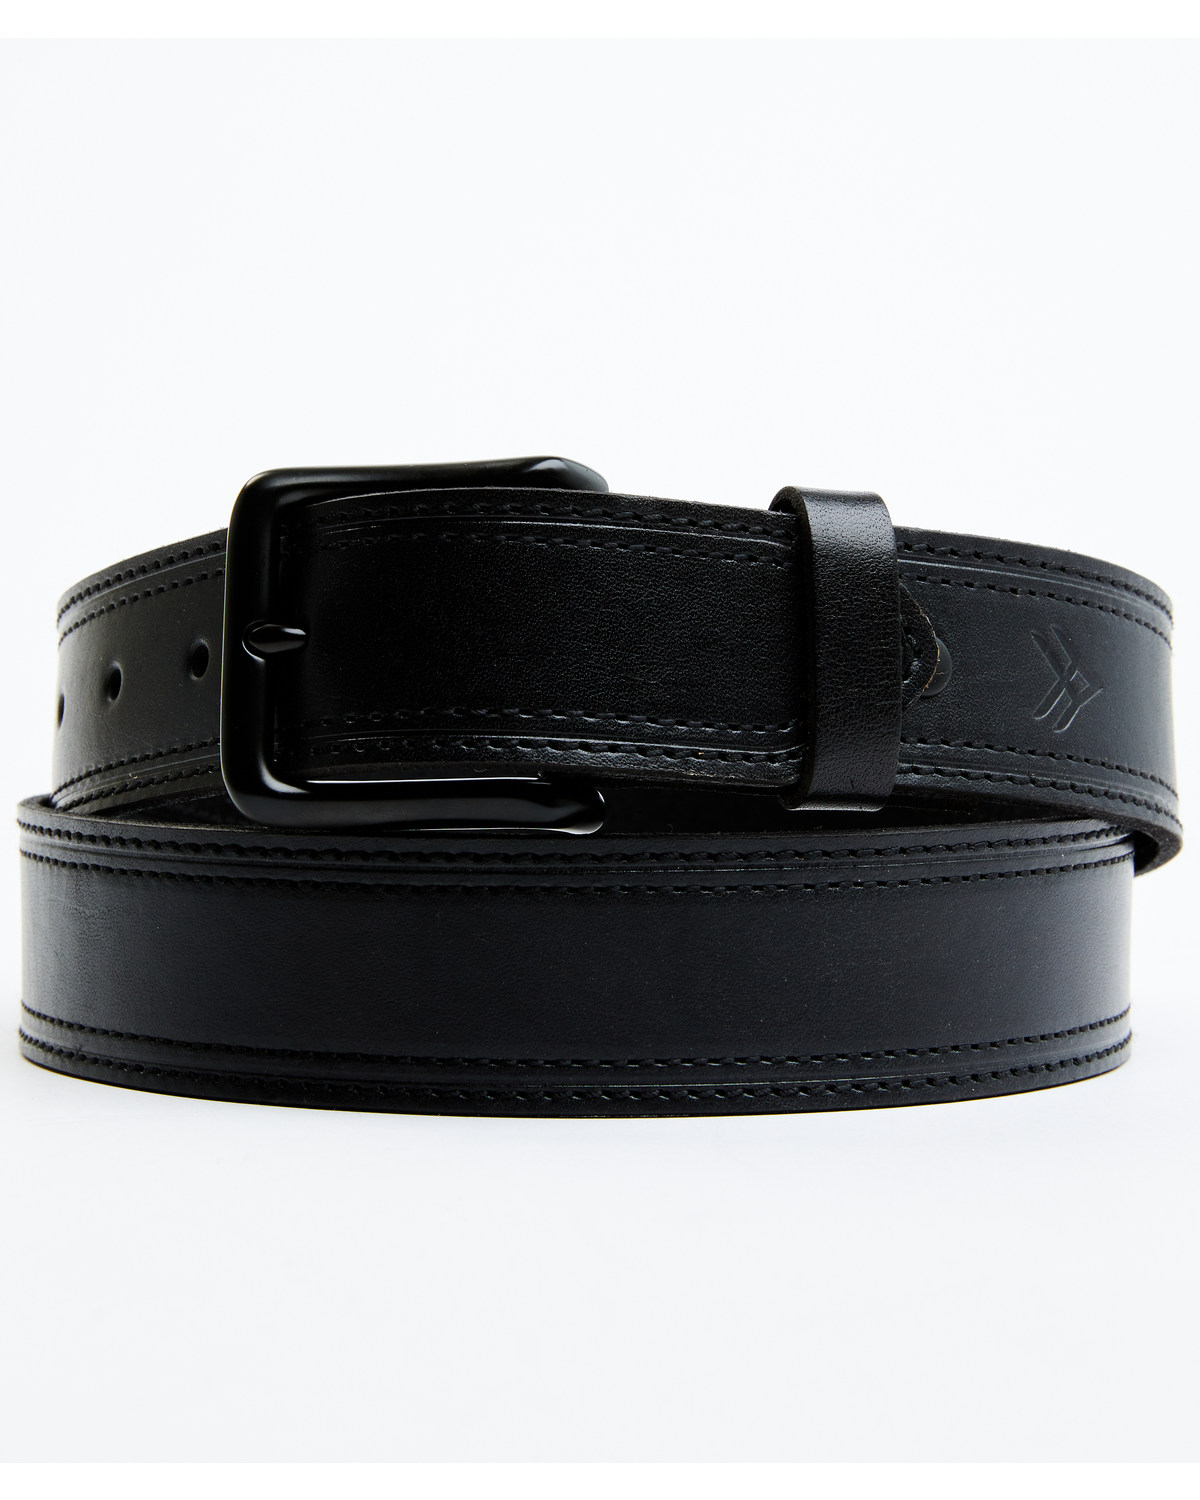 Hawx Men's Smooth Leather Belt